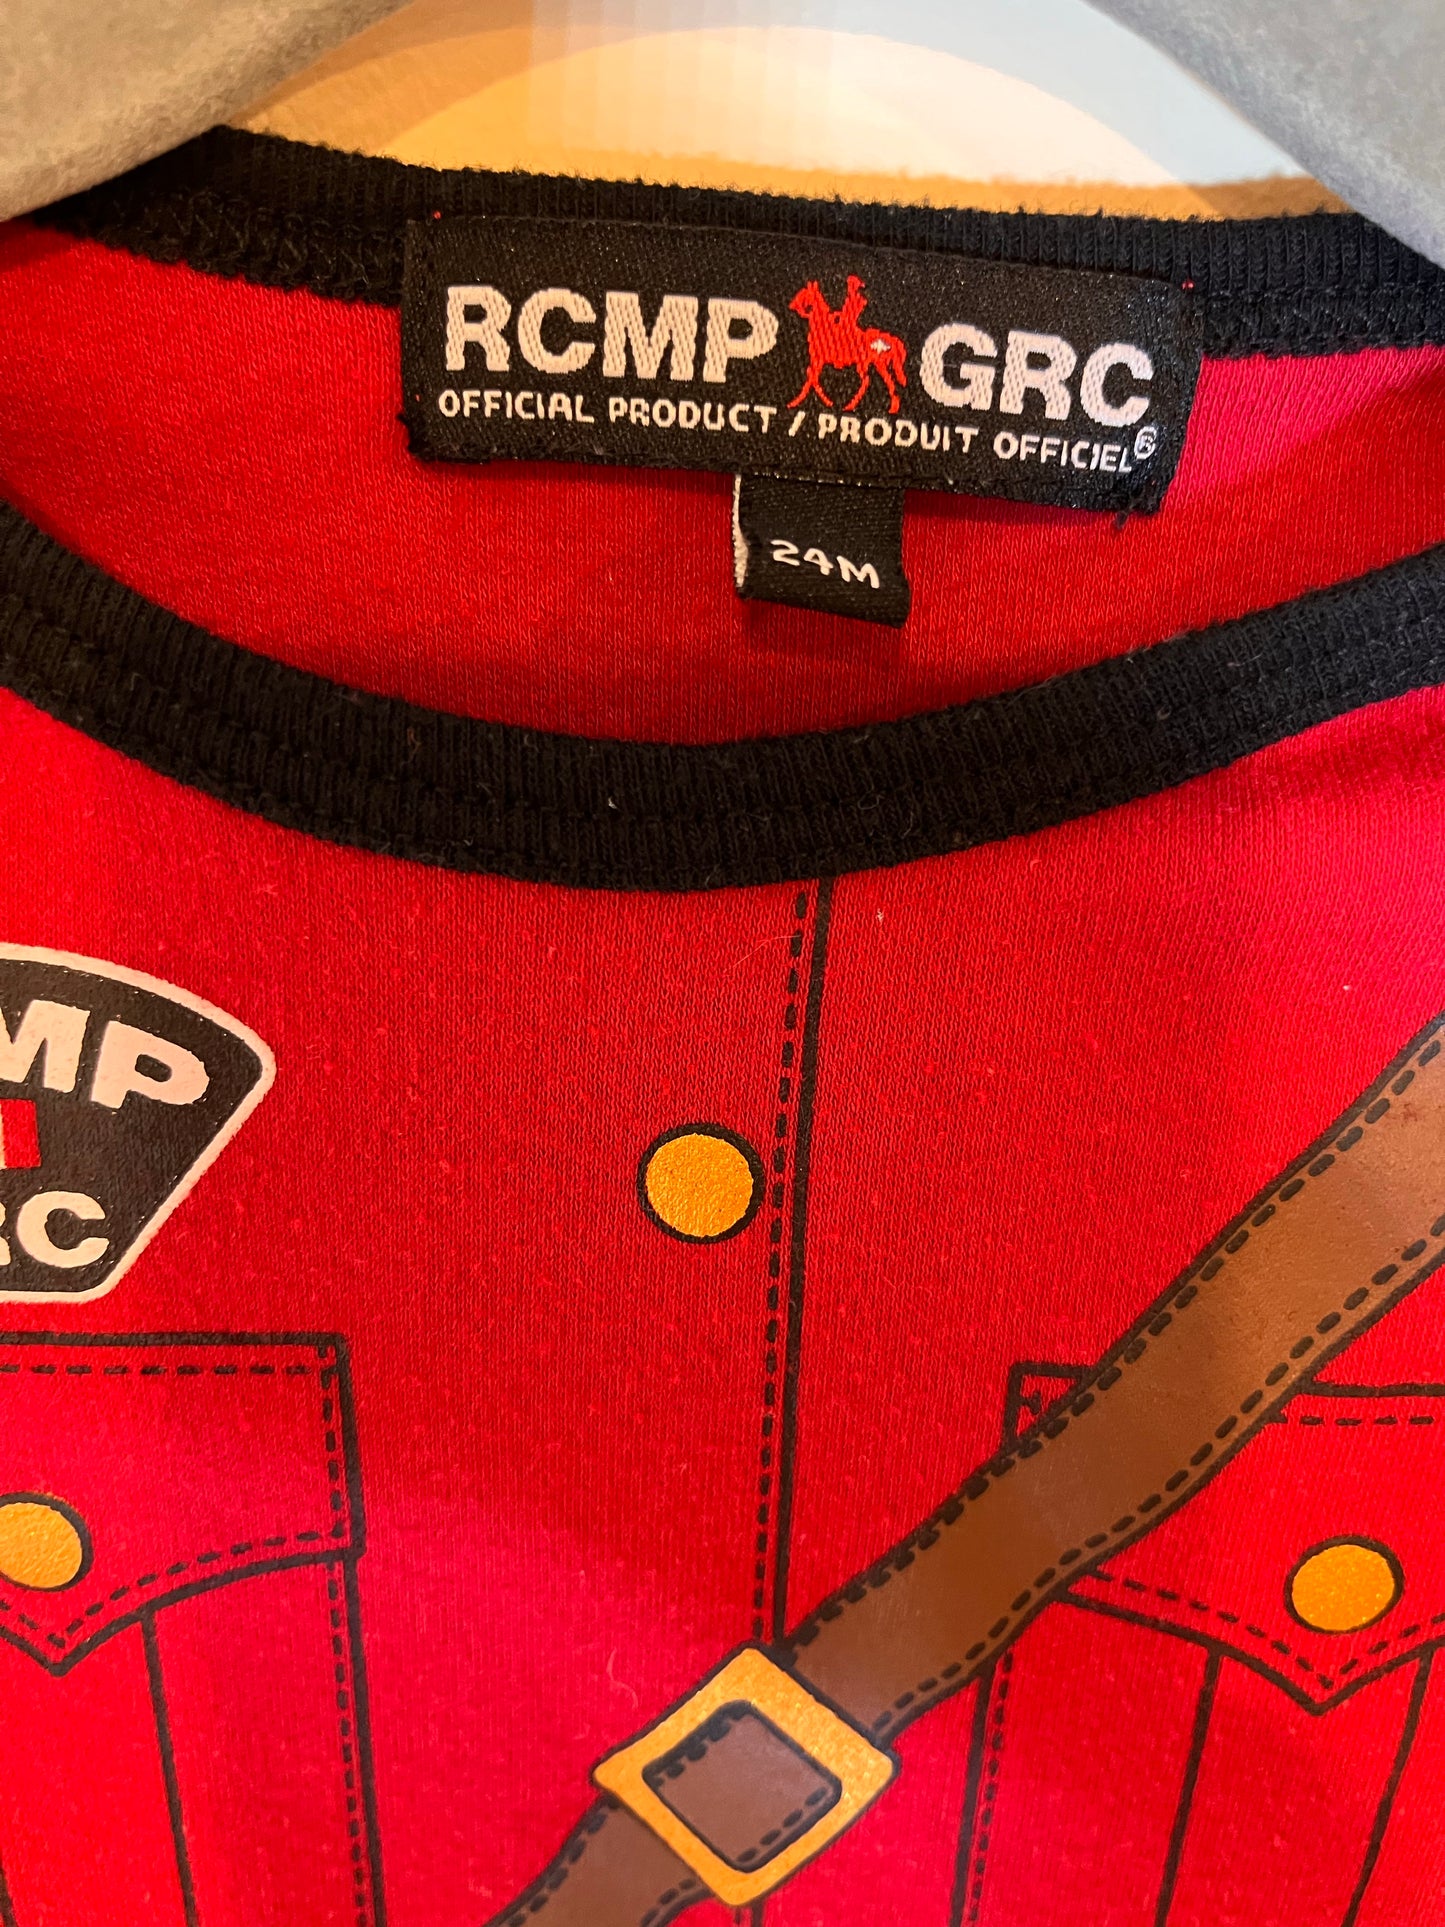 RCMP Uniform Sleeper/Costume (24M)